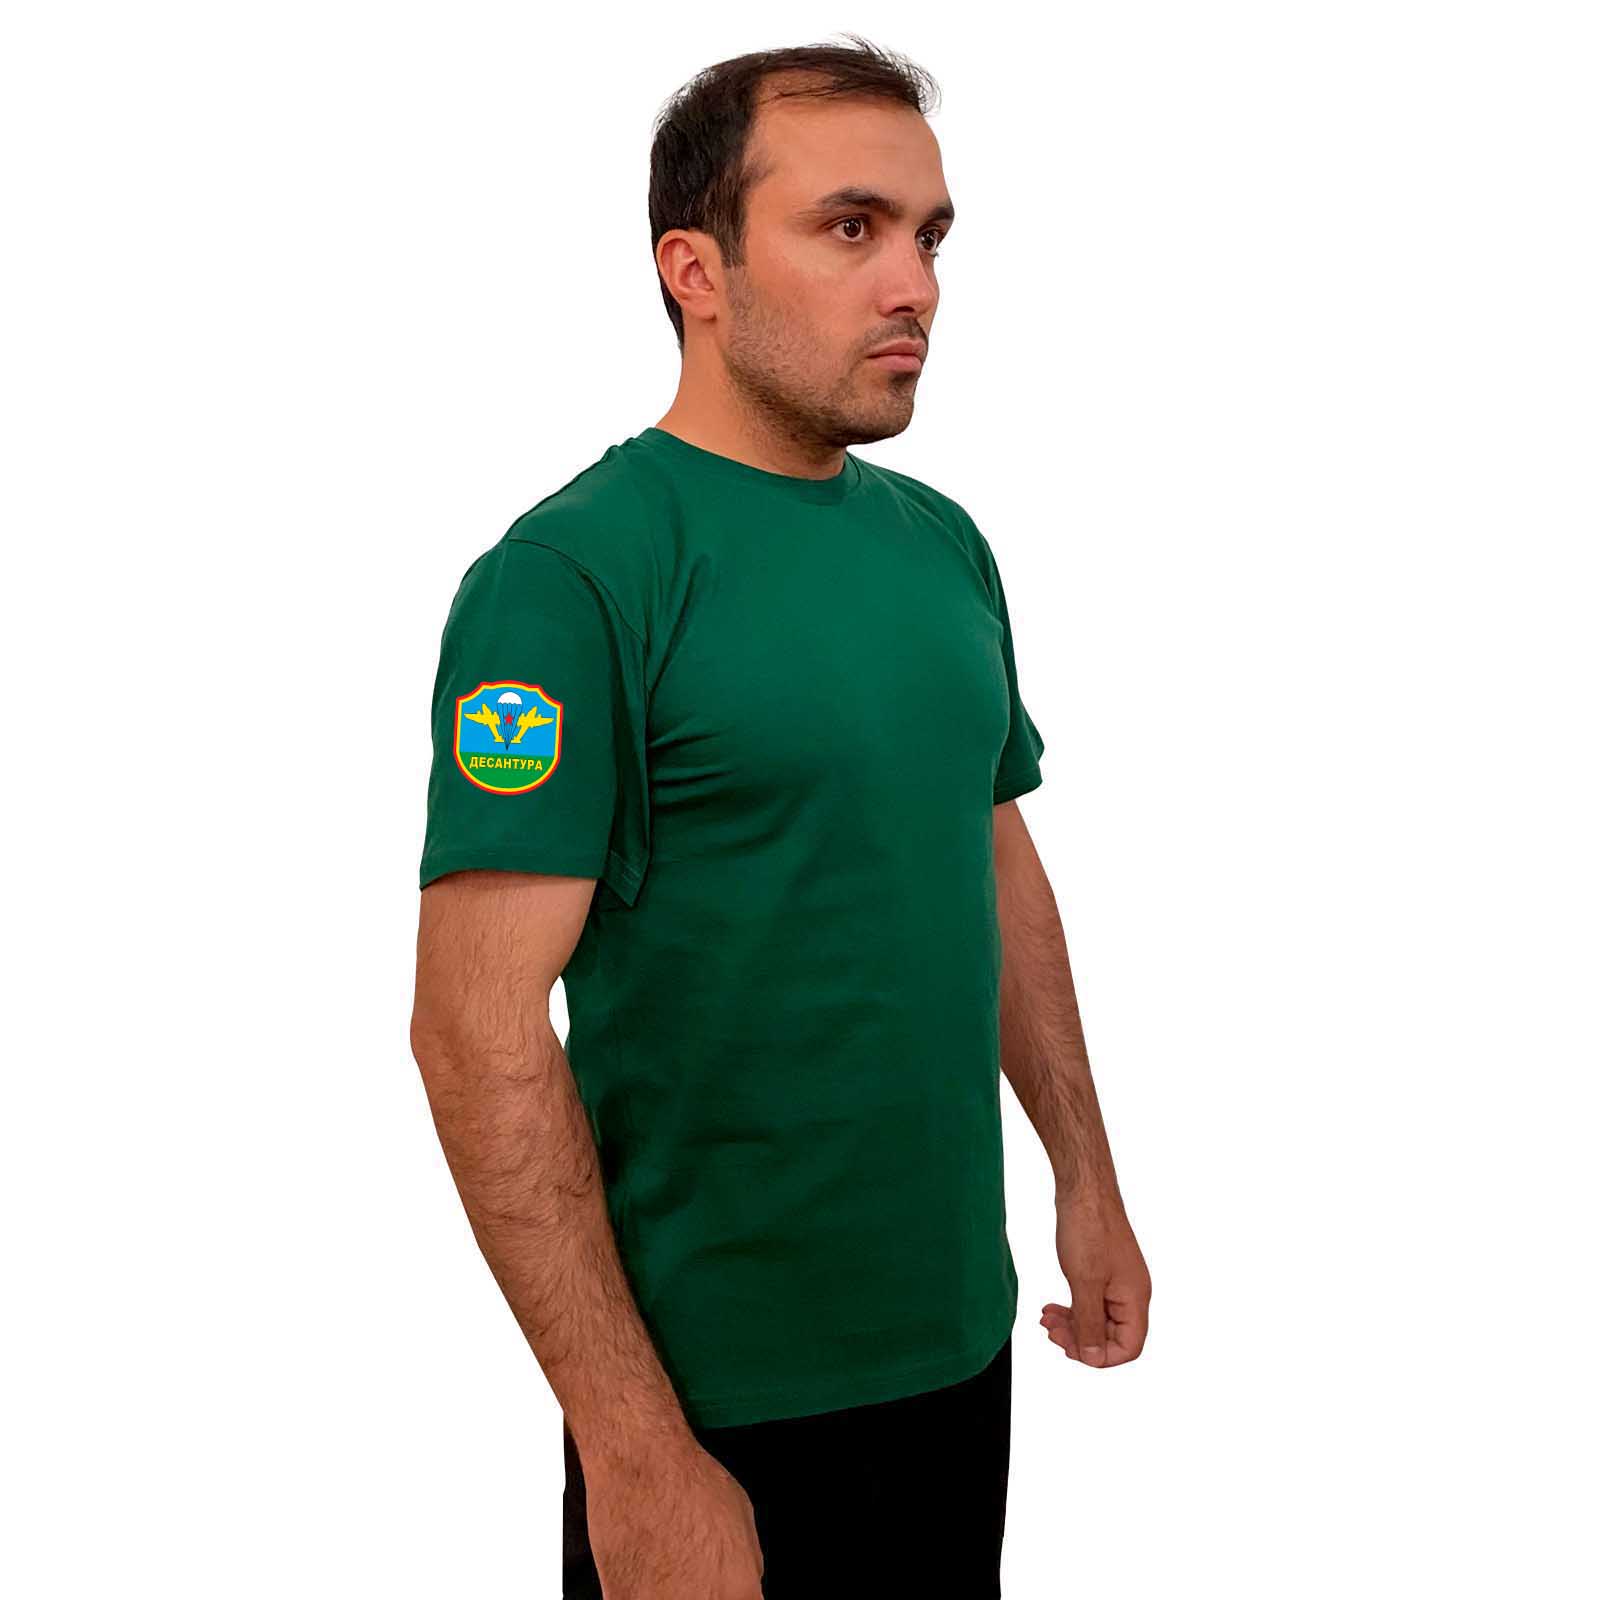 Зелёная футболка с термотрансфером "Десантура" на рукаве